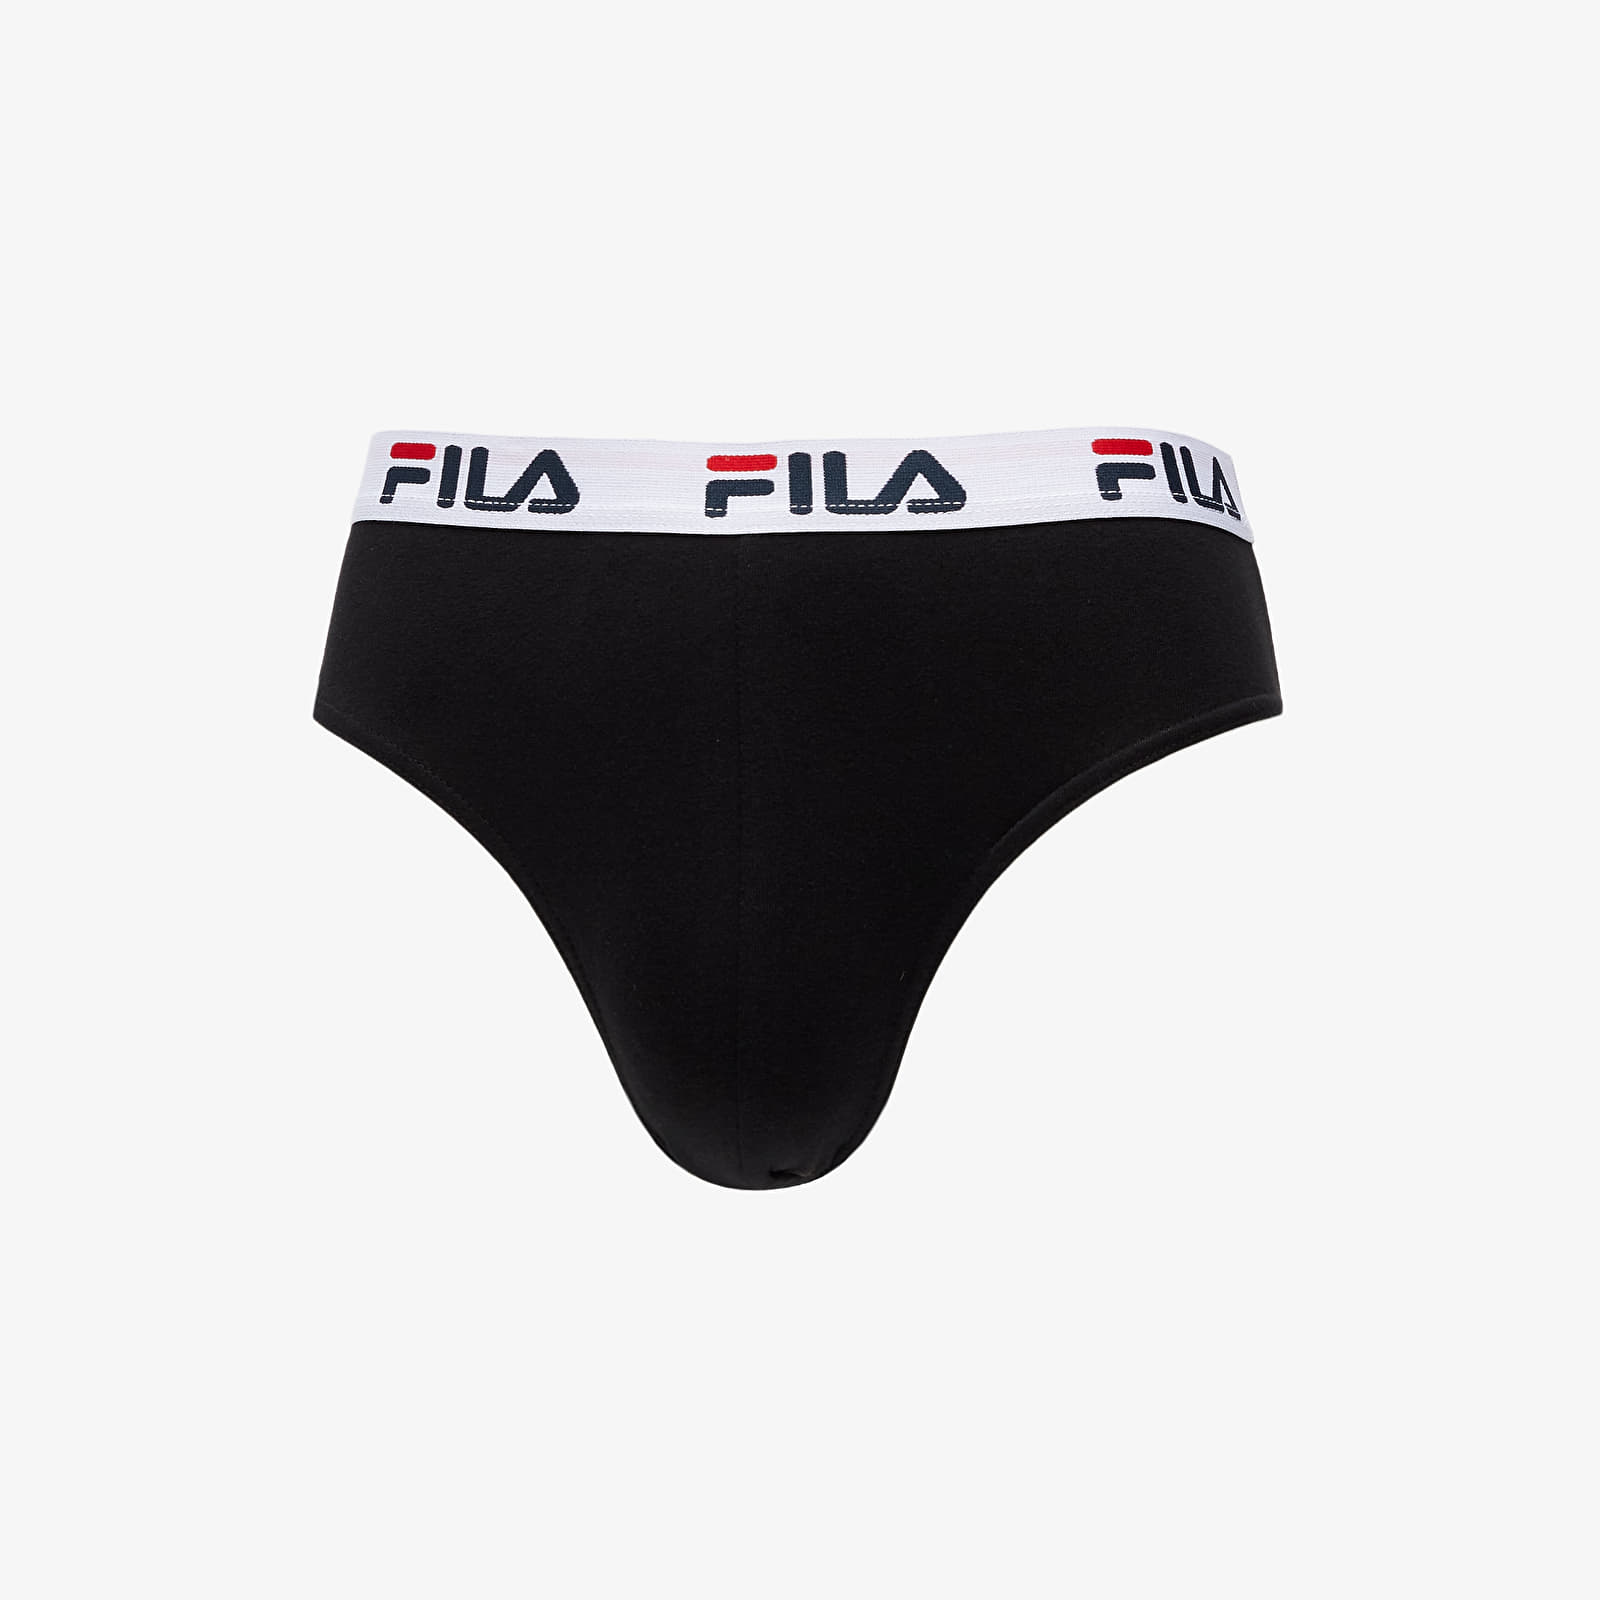 Men's underwear FILA Brief Black